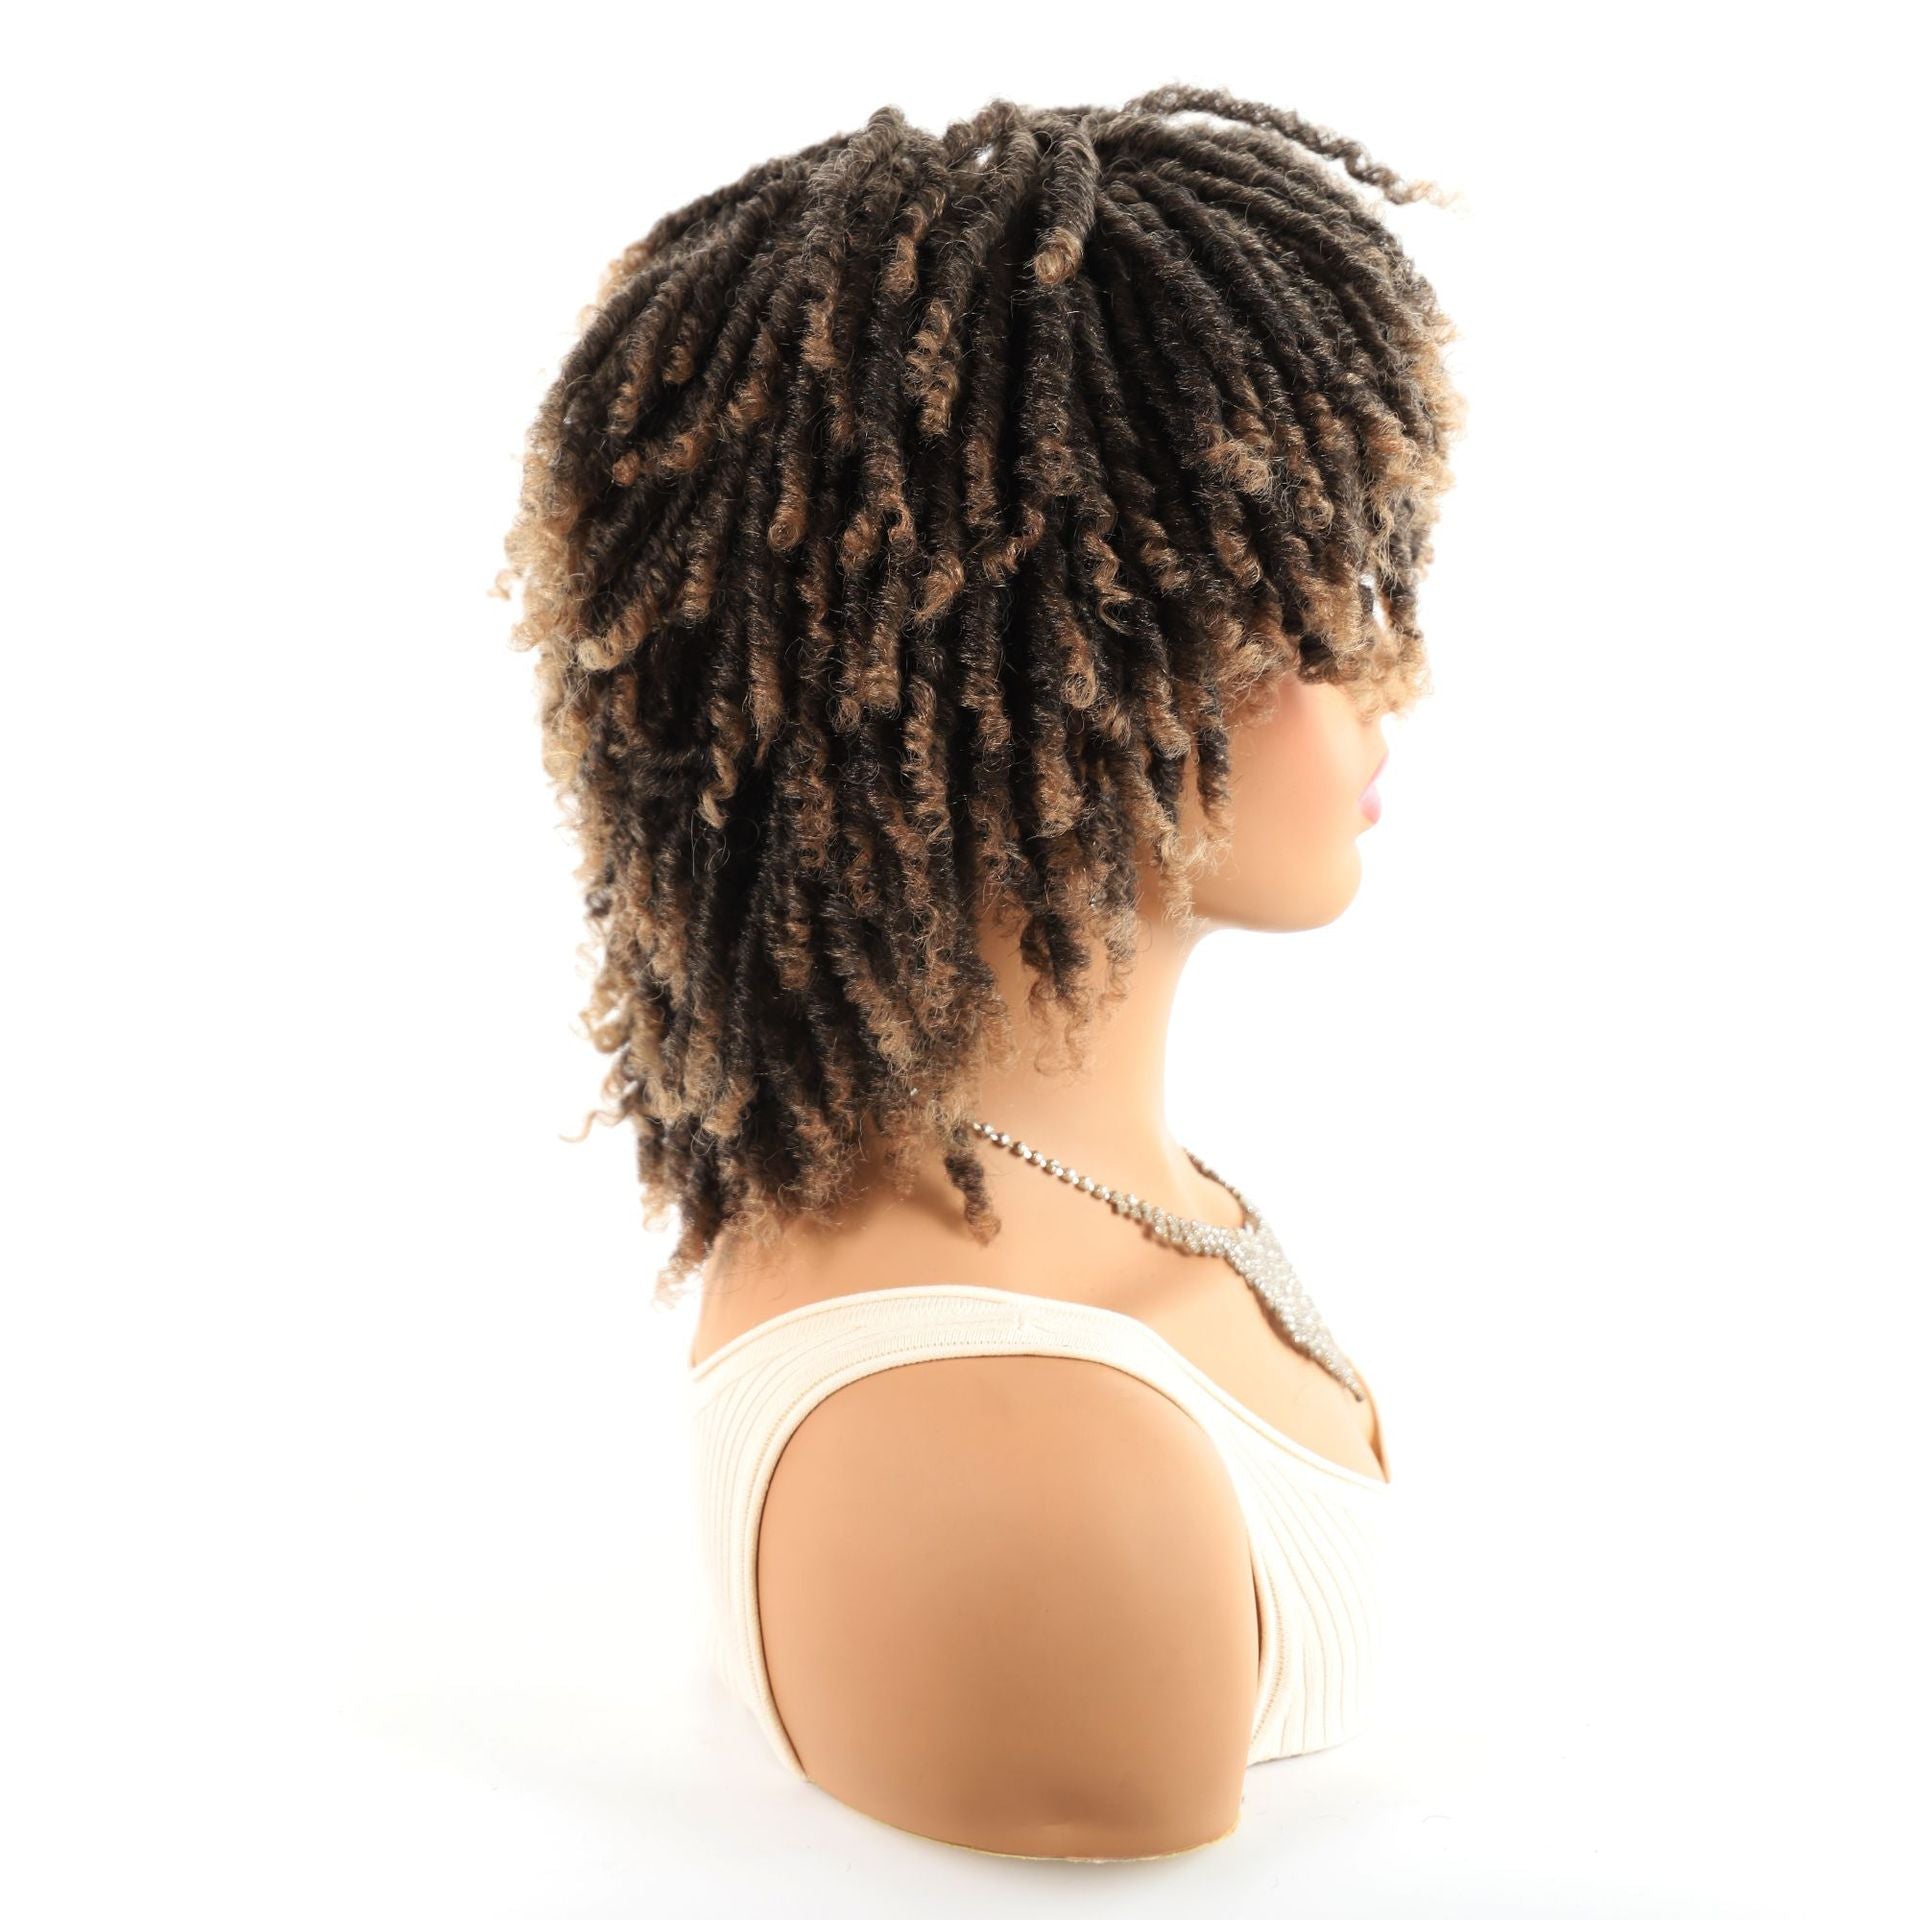  Small Curly African Wig cashymart